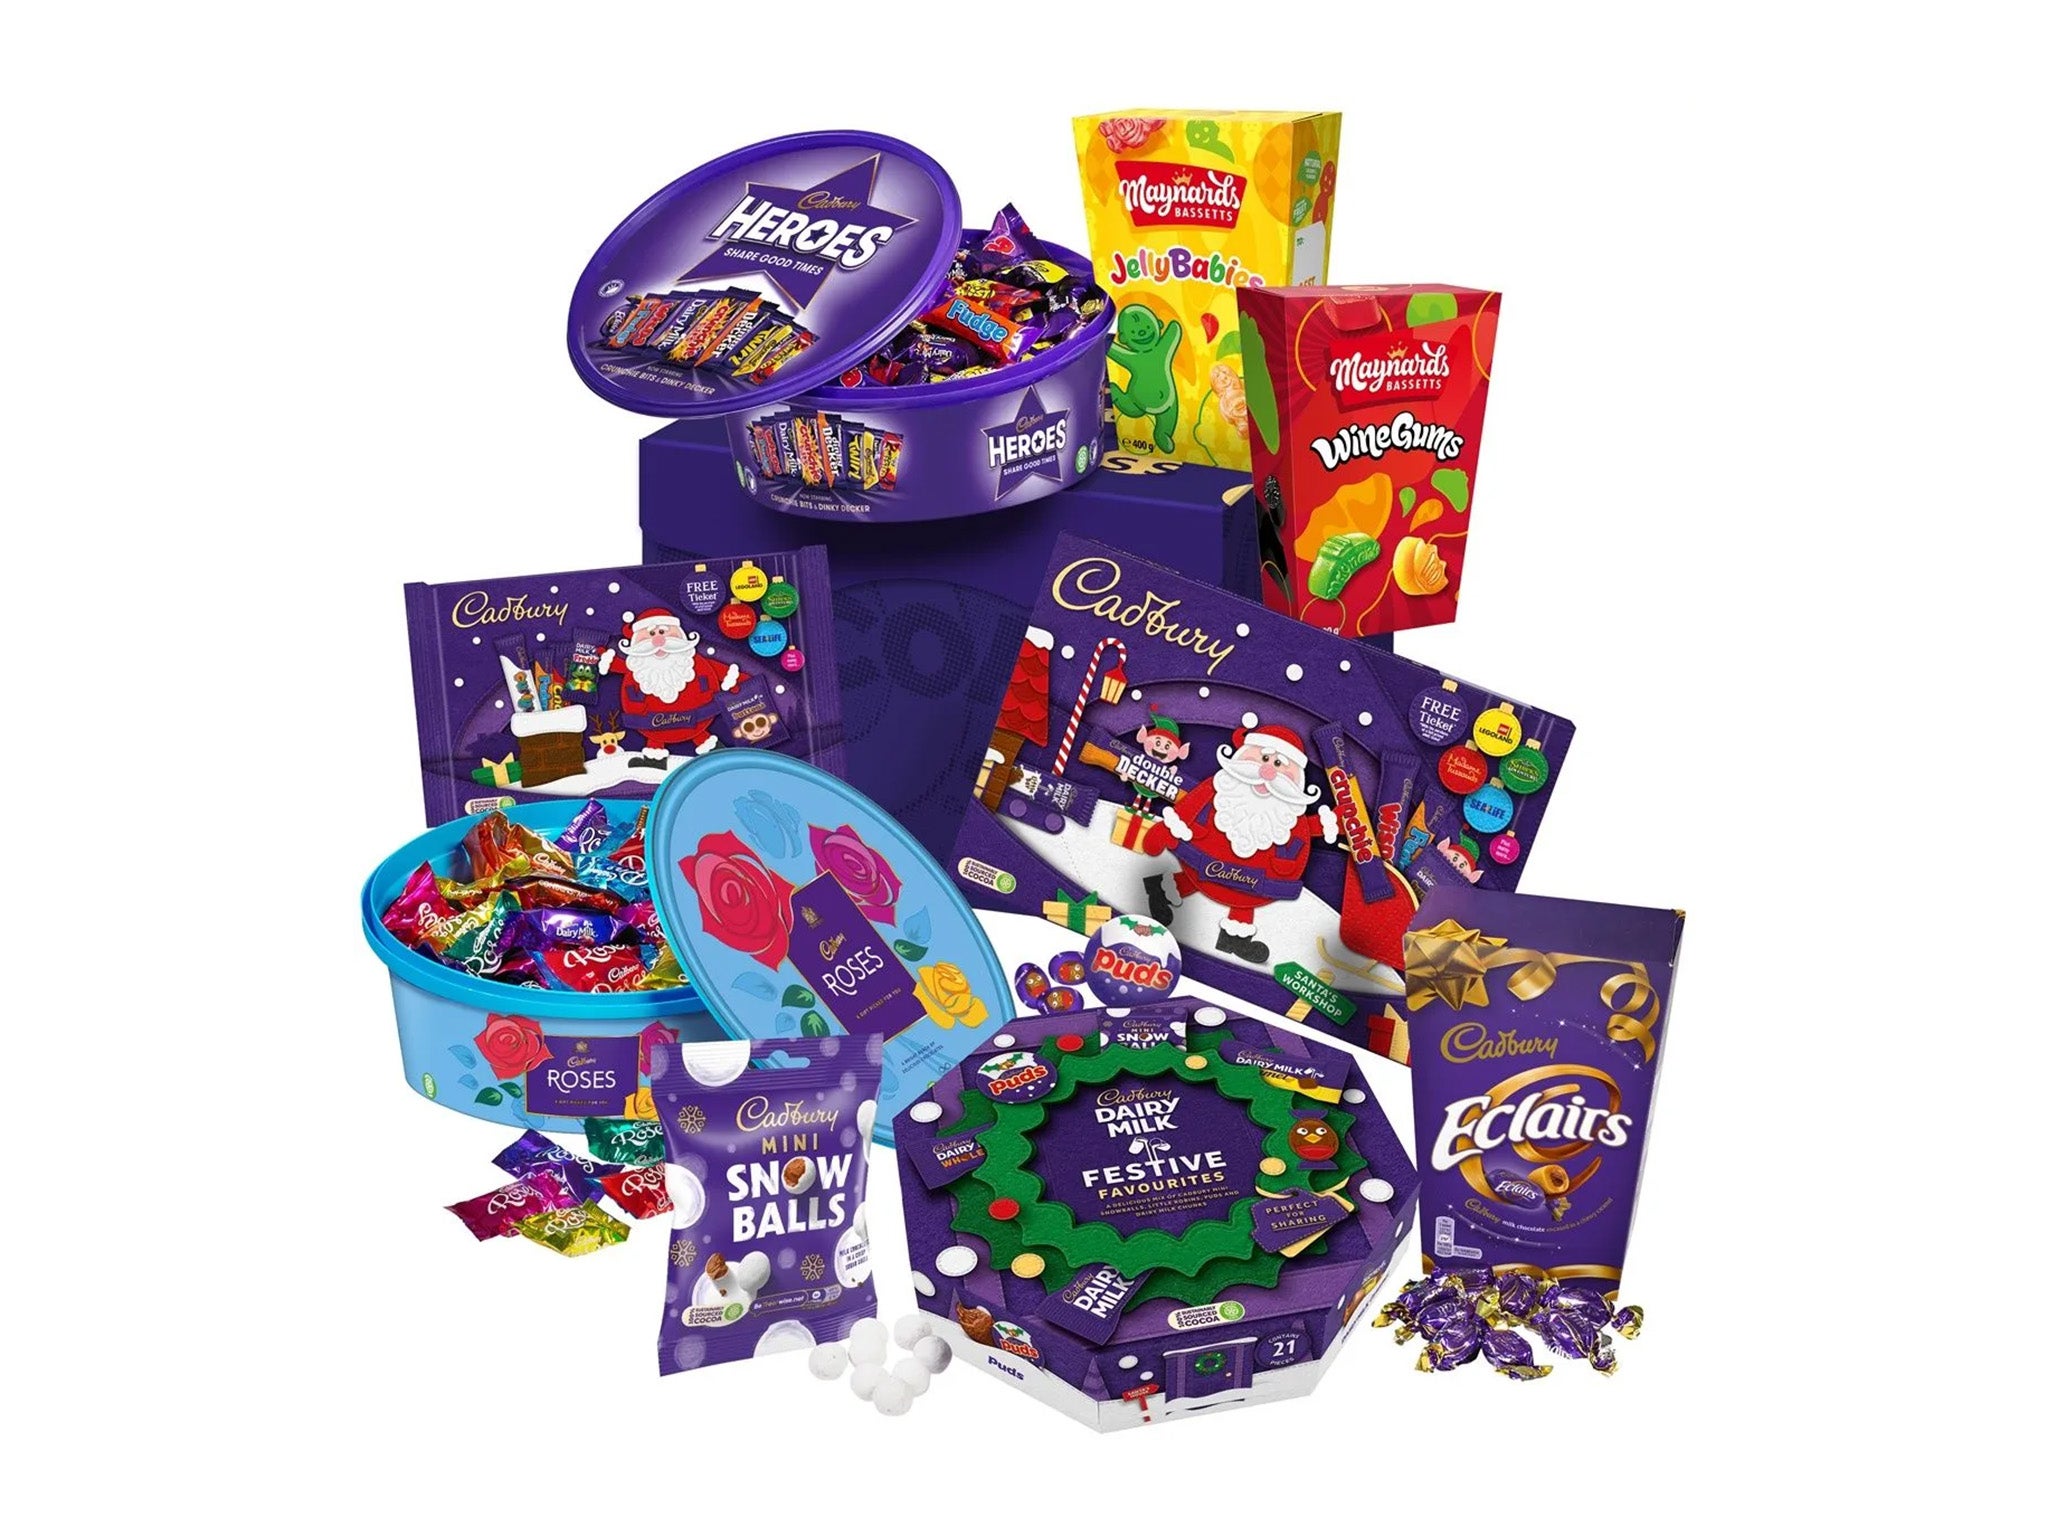 Cadbury Christmas hamper – large